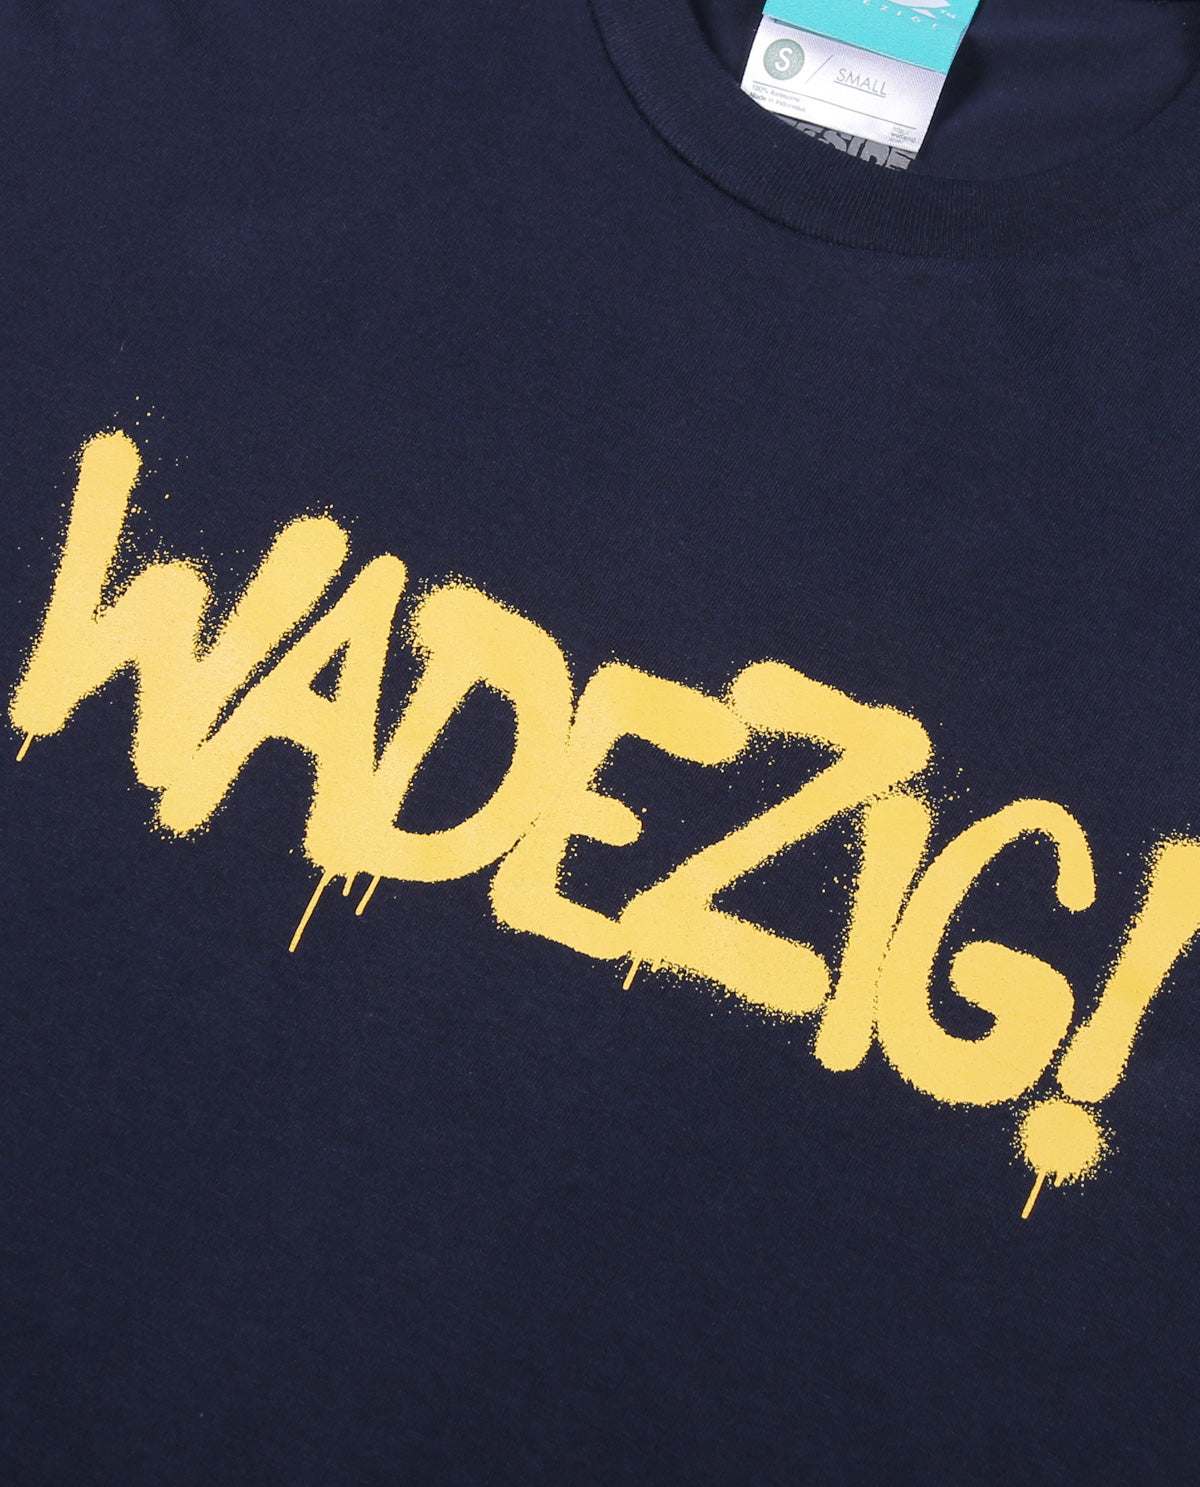 Wadezig! T-Shirt - Flagrant Navy #2